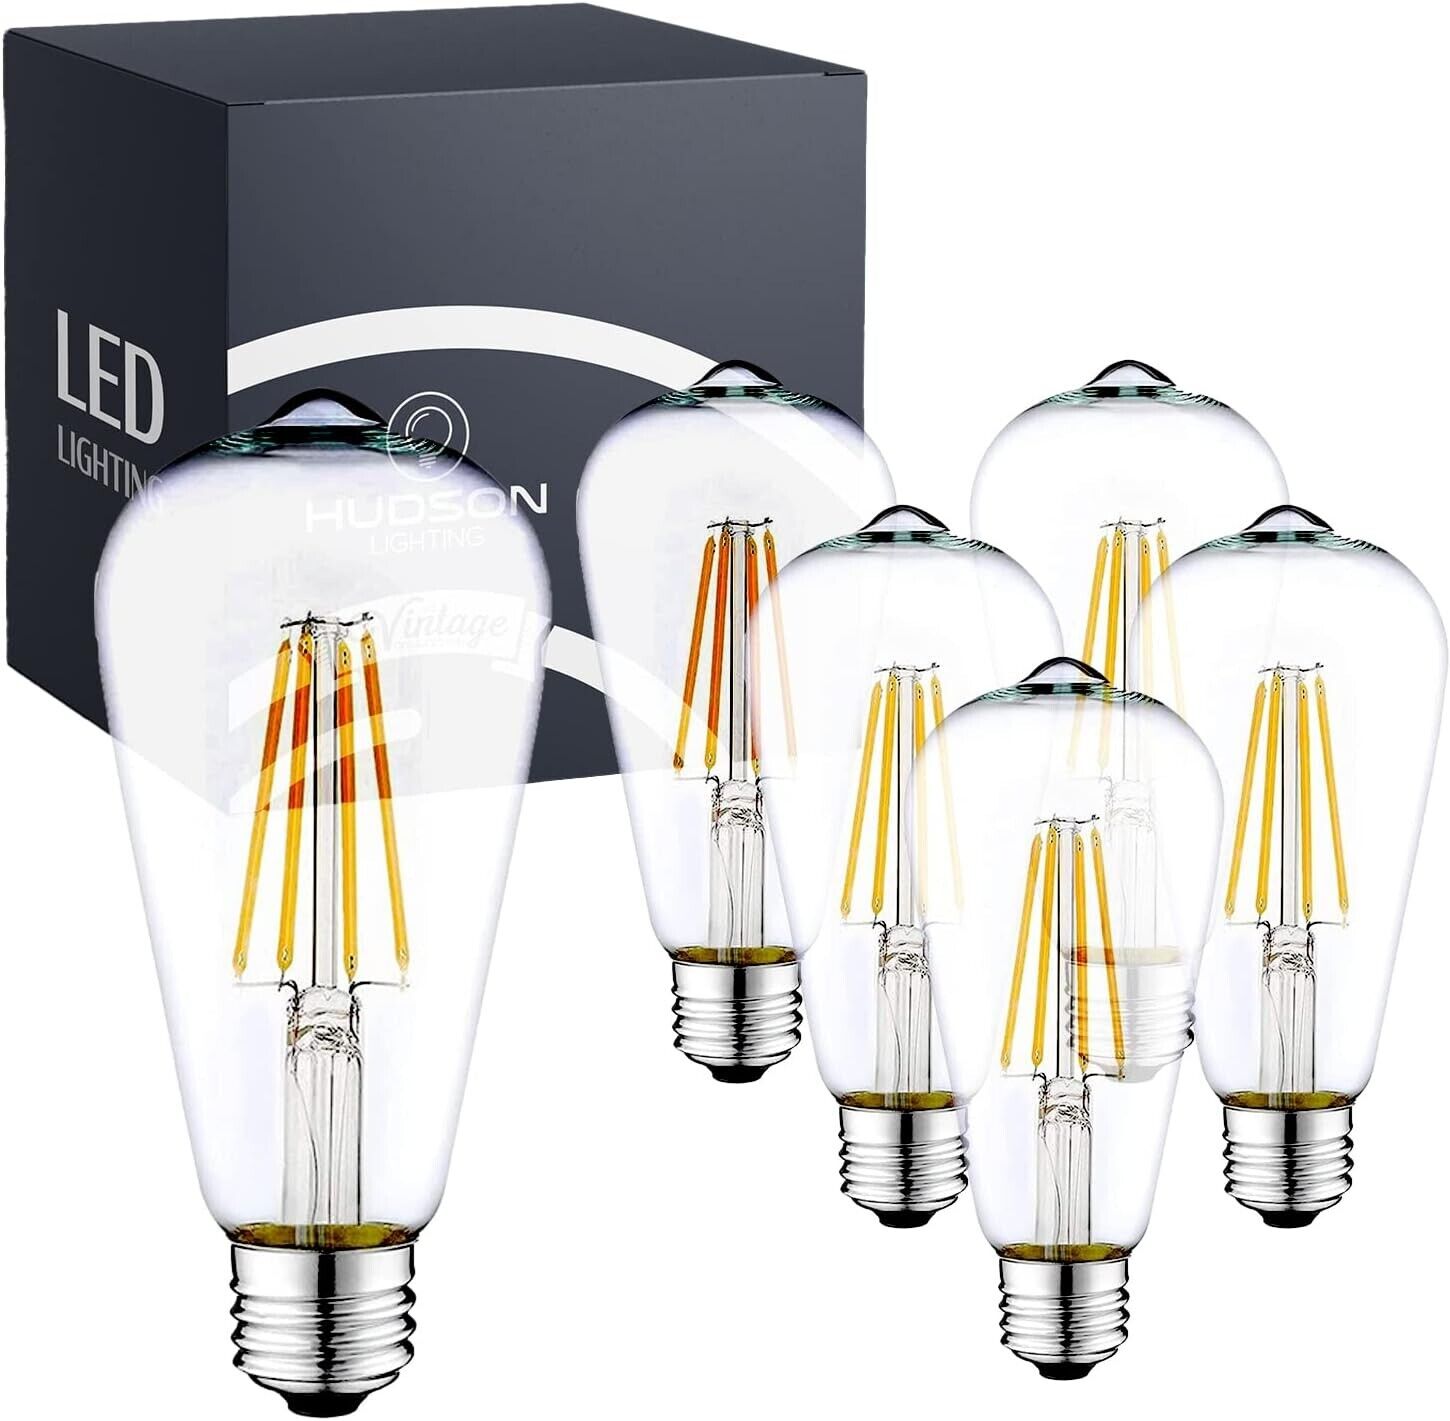 HUDSON BULB CO. Vintage LED Edison Light Bulbs 60W (6 Pack)- E26/E27 Base